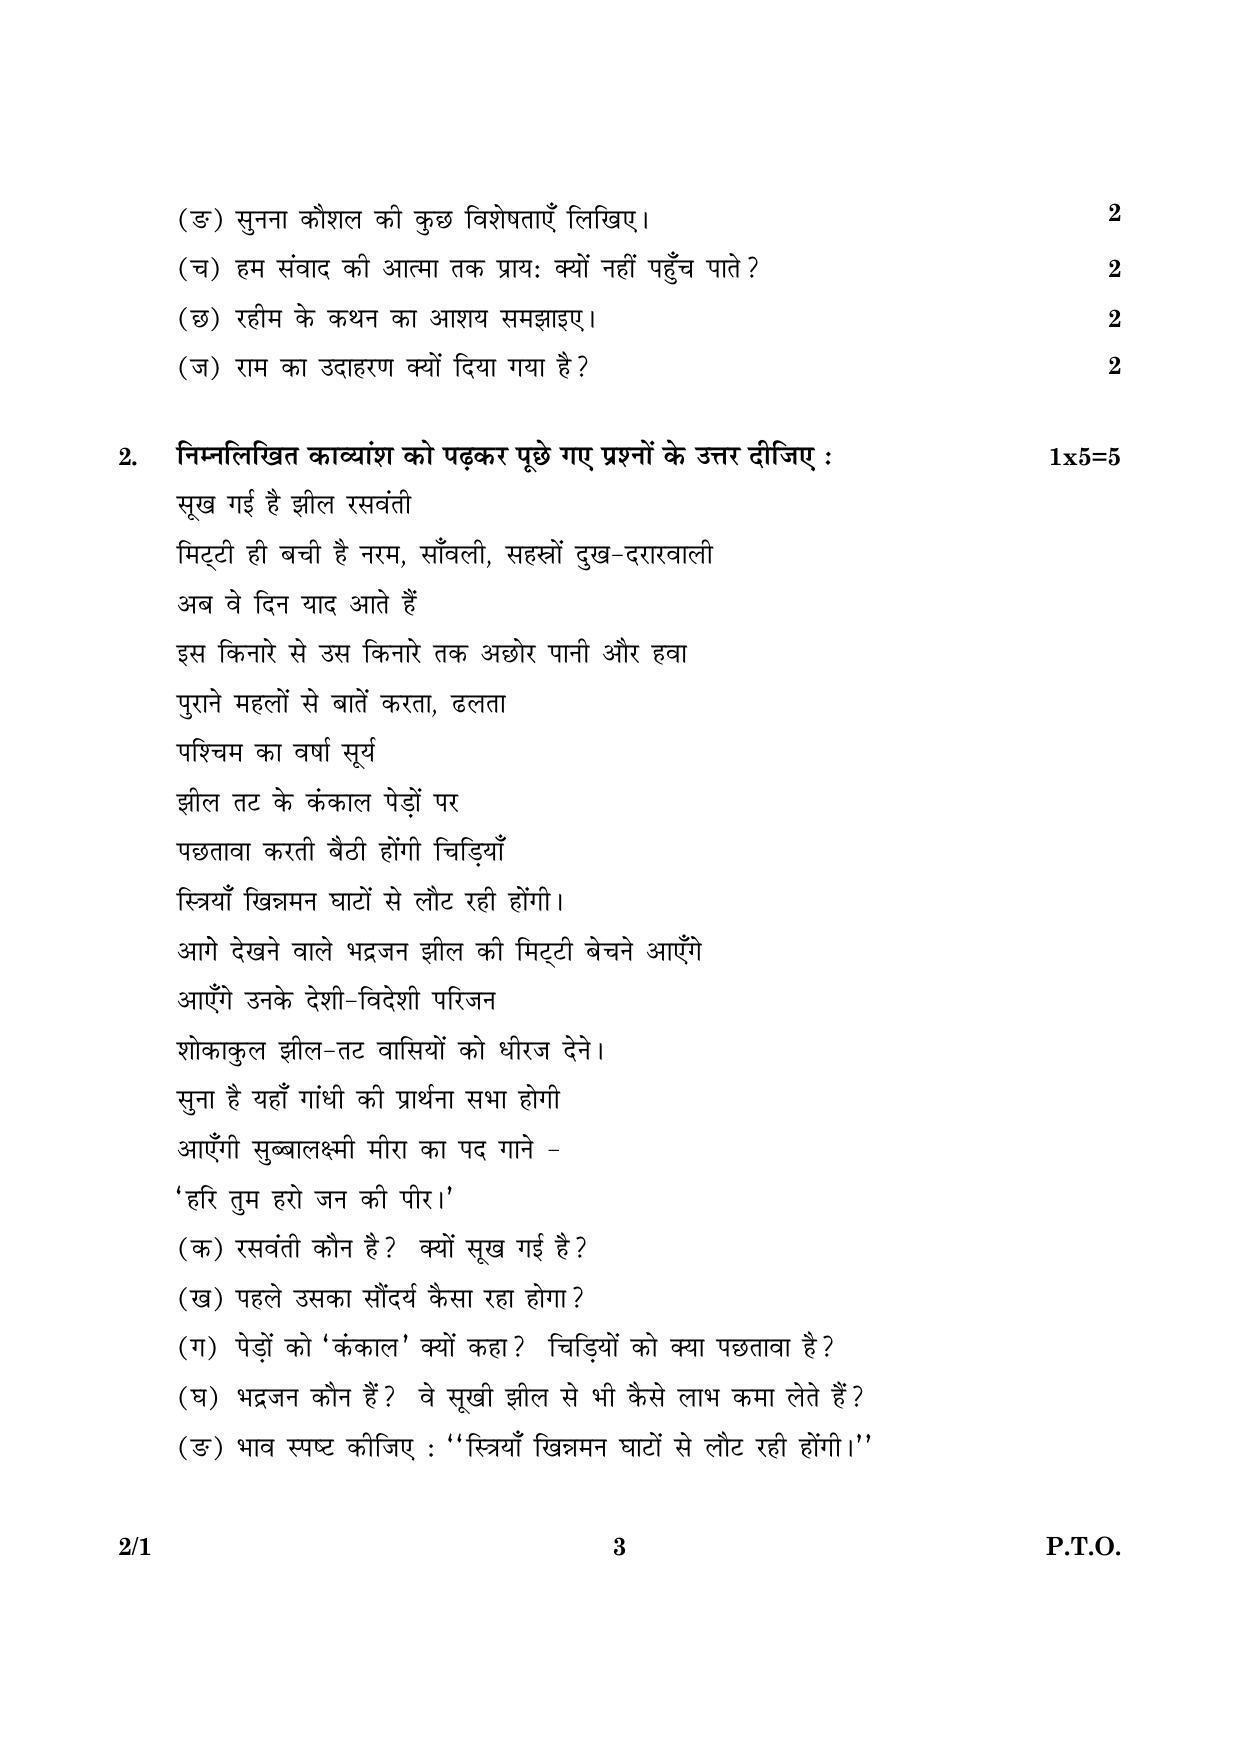 CBSE Class 12 002 Set 1 Hindi (Core) 2016 Question Paper - Page 3